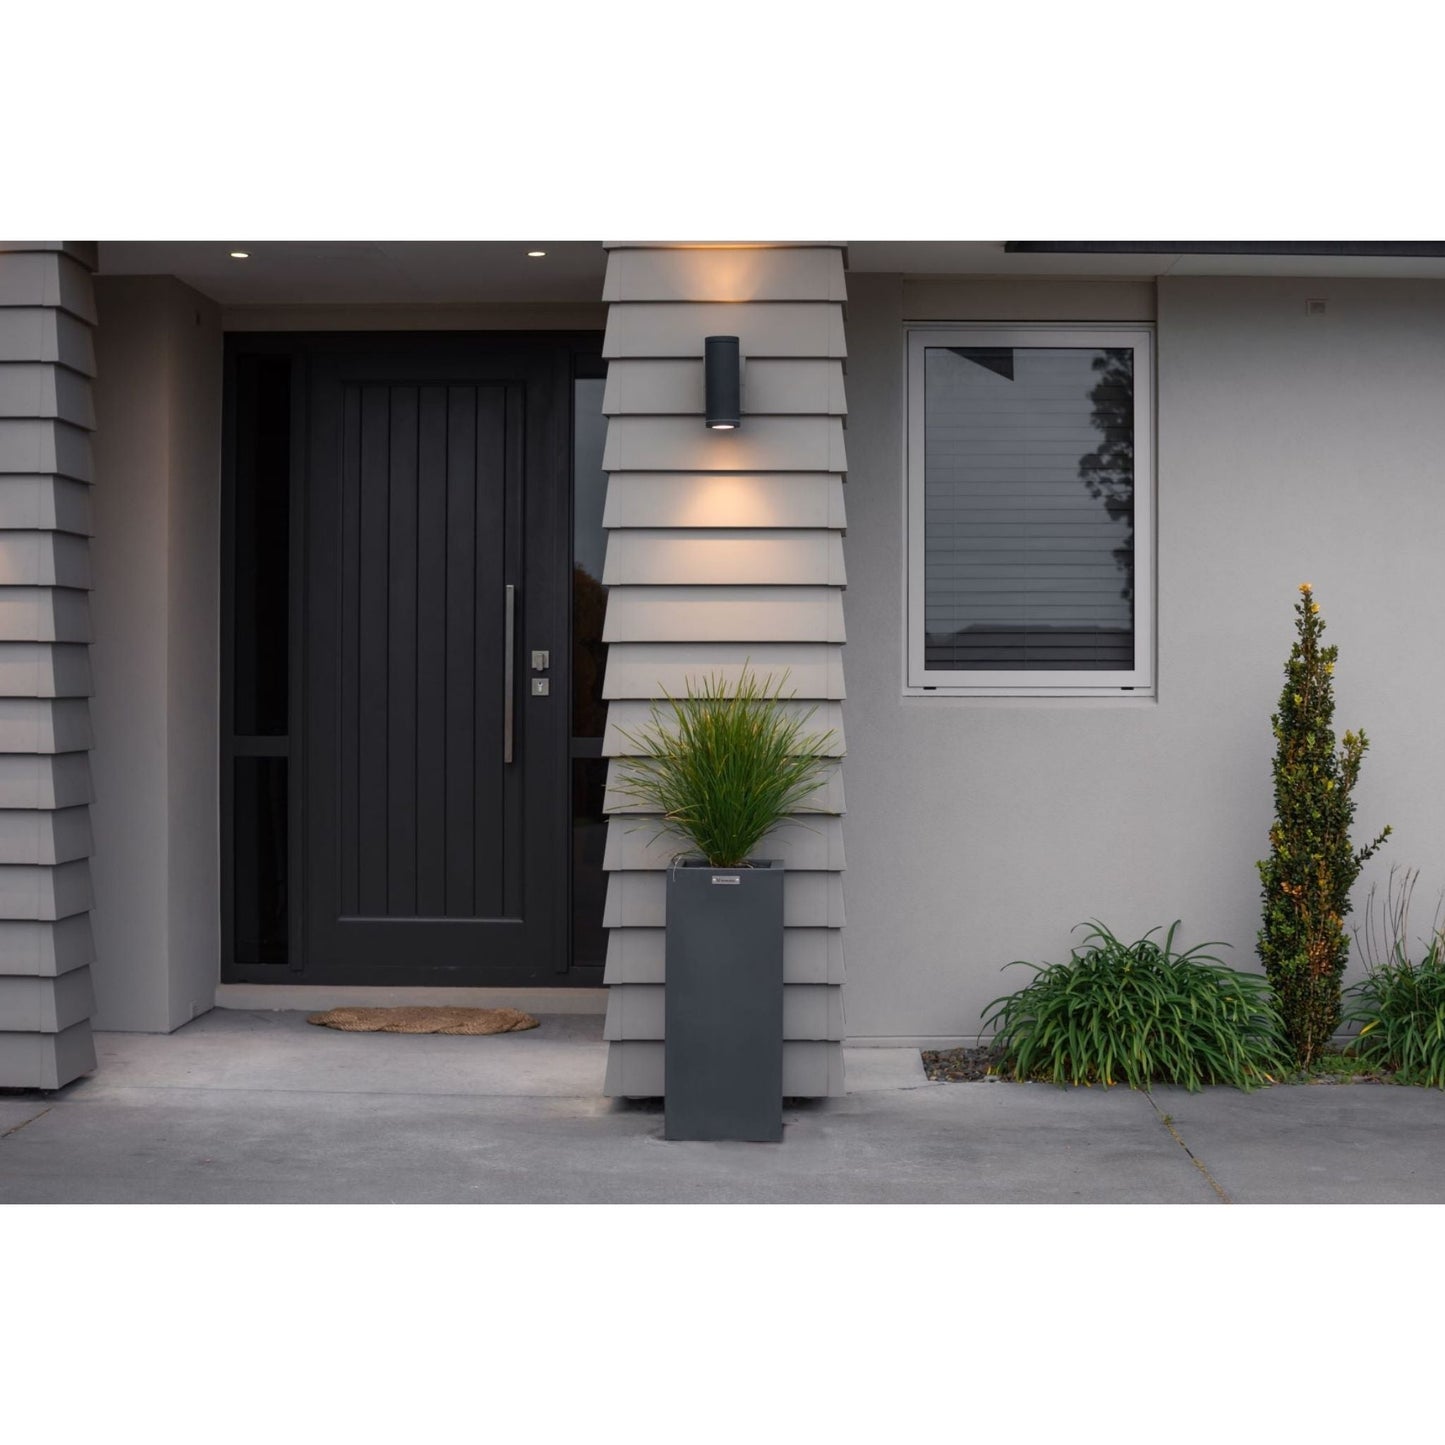 A cube planter pot in a dark grey colour sitting beside a house entranceway.